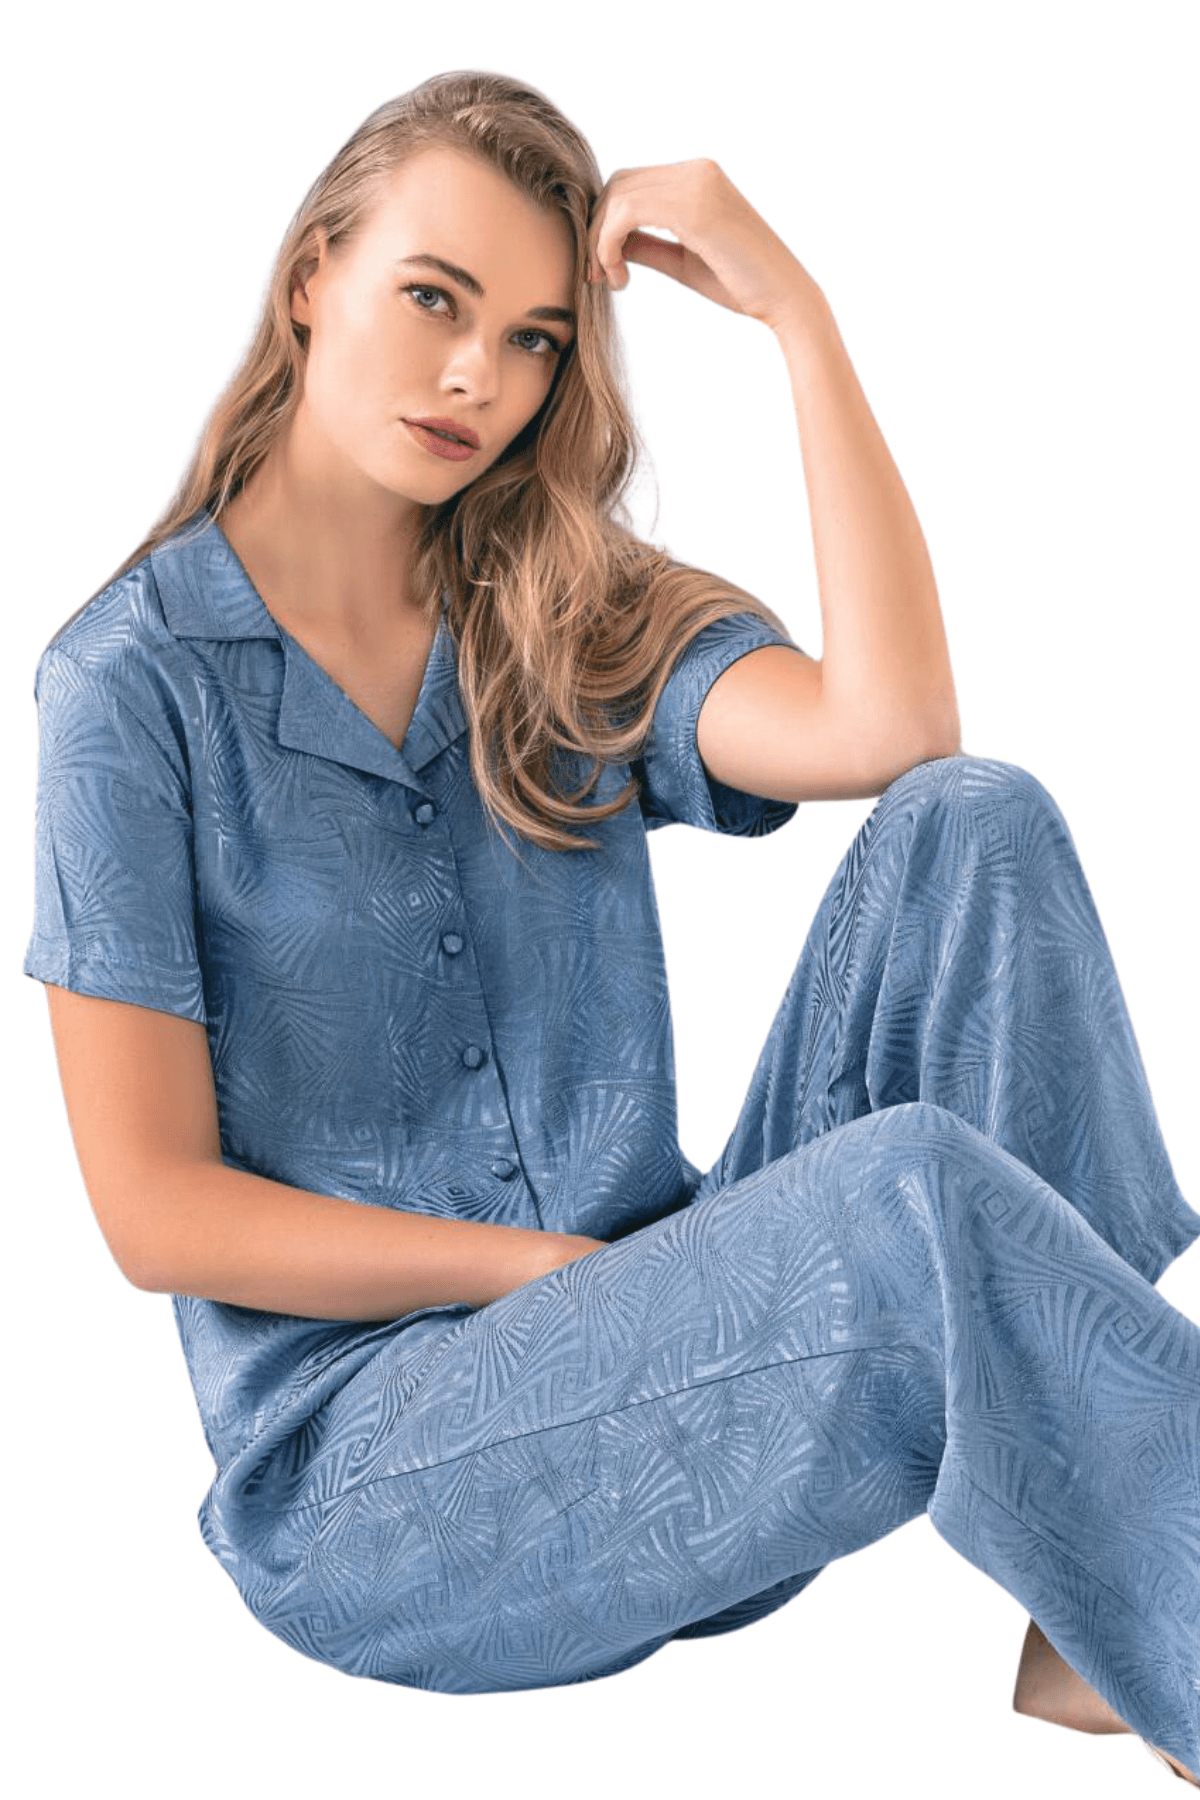 FLZ Женски пижами 8836 сини